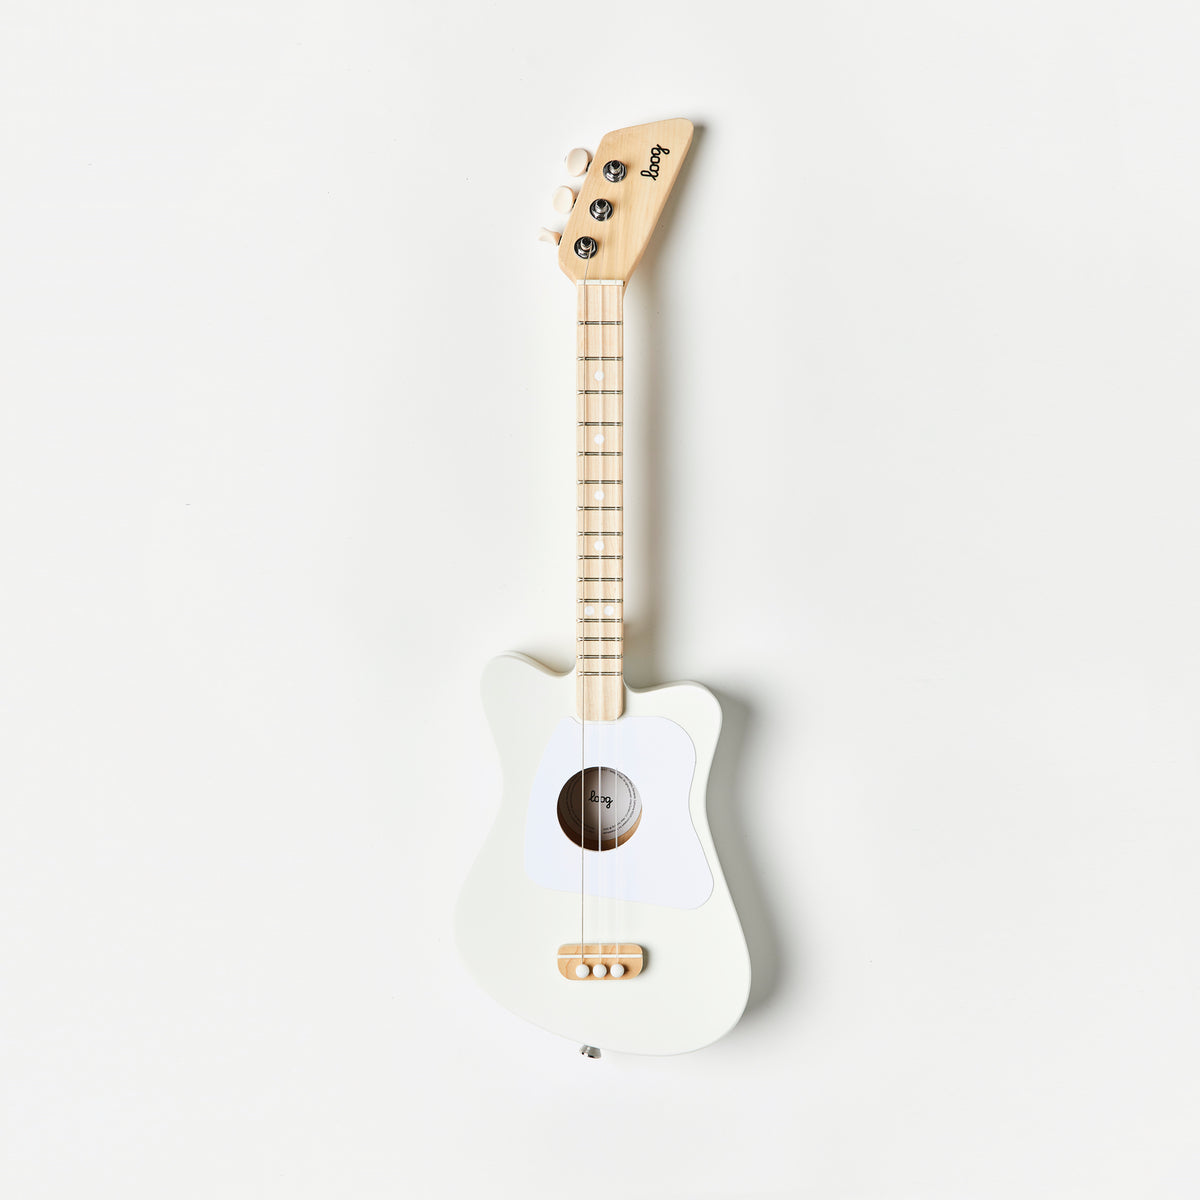 white-guitar-strap-gig-bag white-guitar-strap-wall-hanger white-guitar-strap-stand